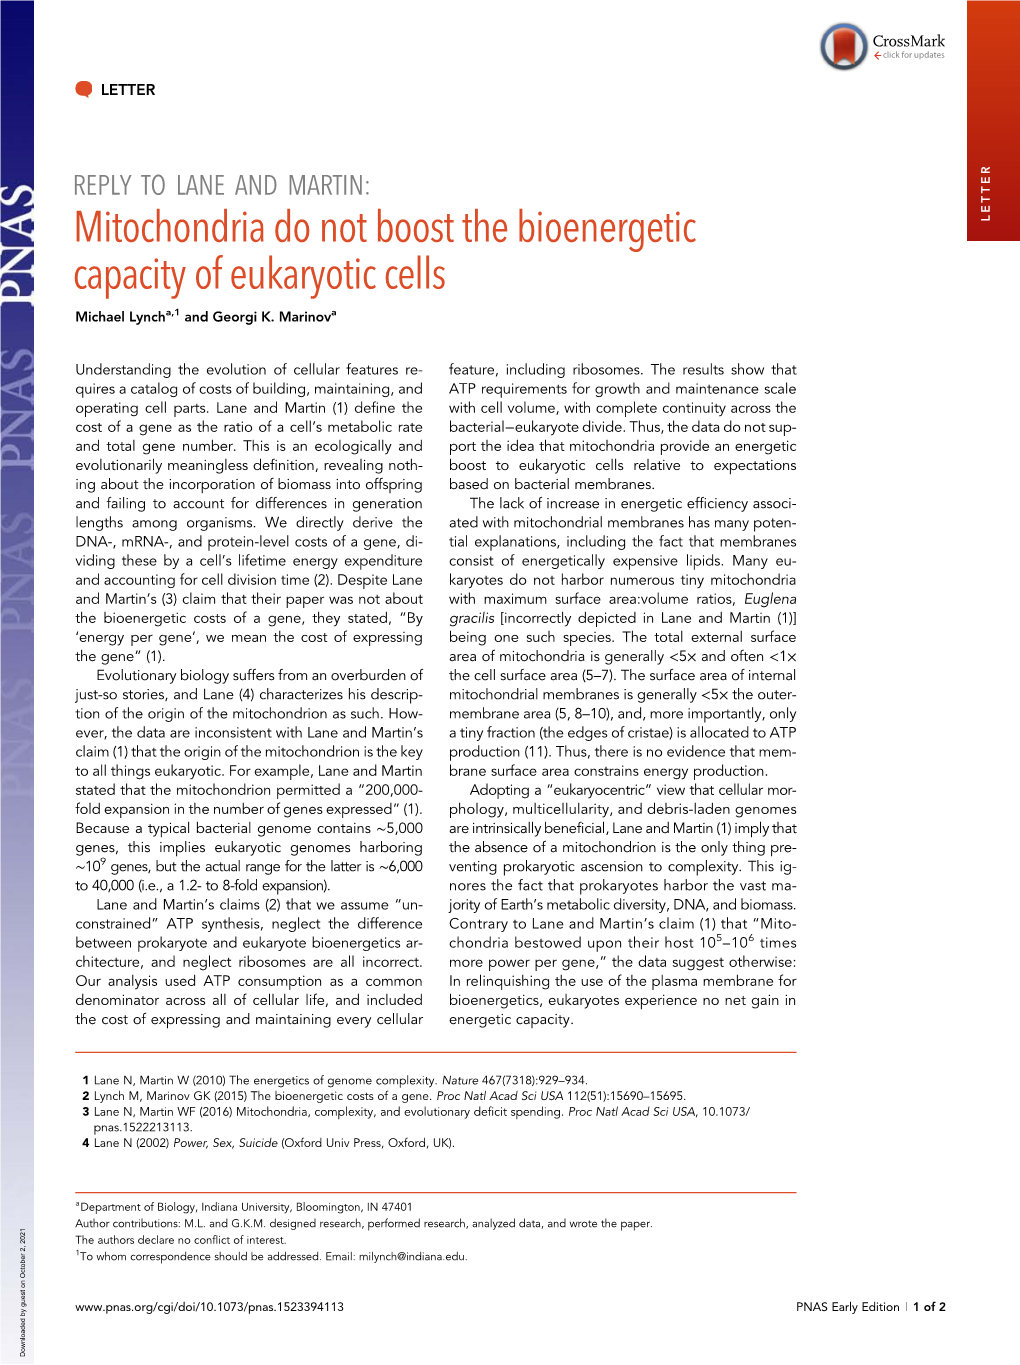 Mitochondria Do Not Boost the Bioenergetic Capacity of Eukaryotic